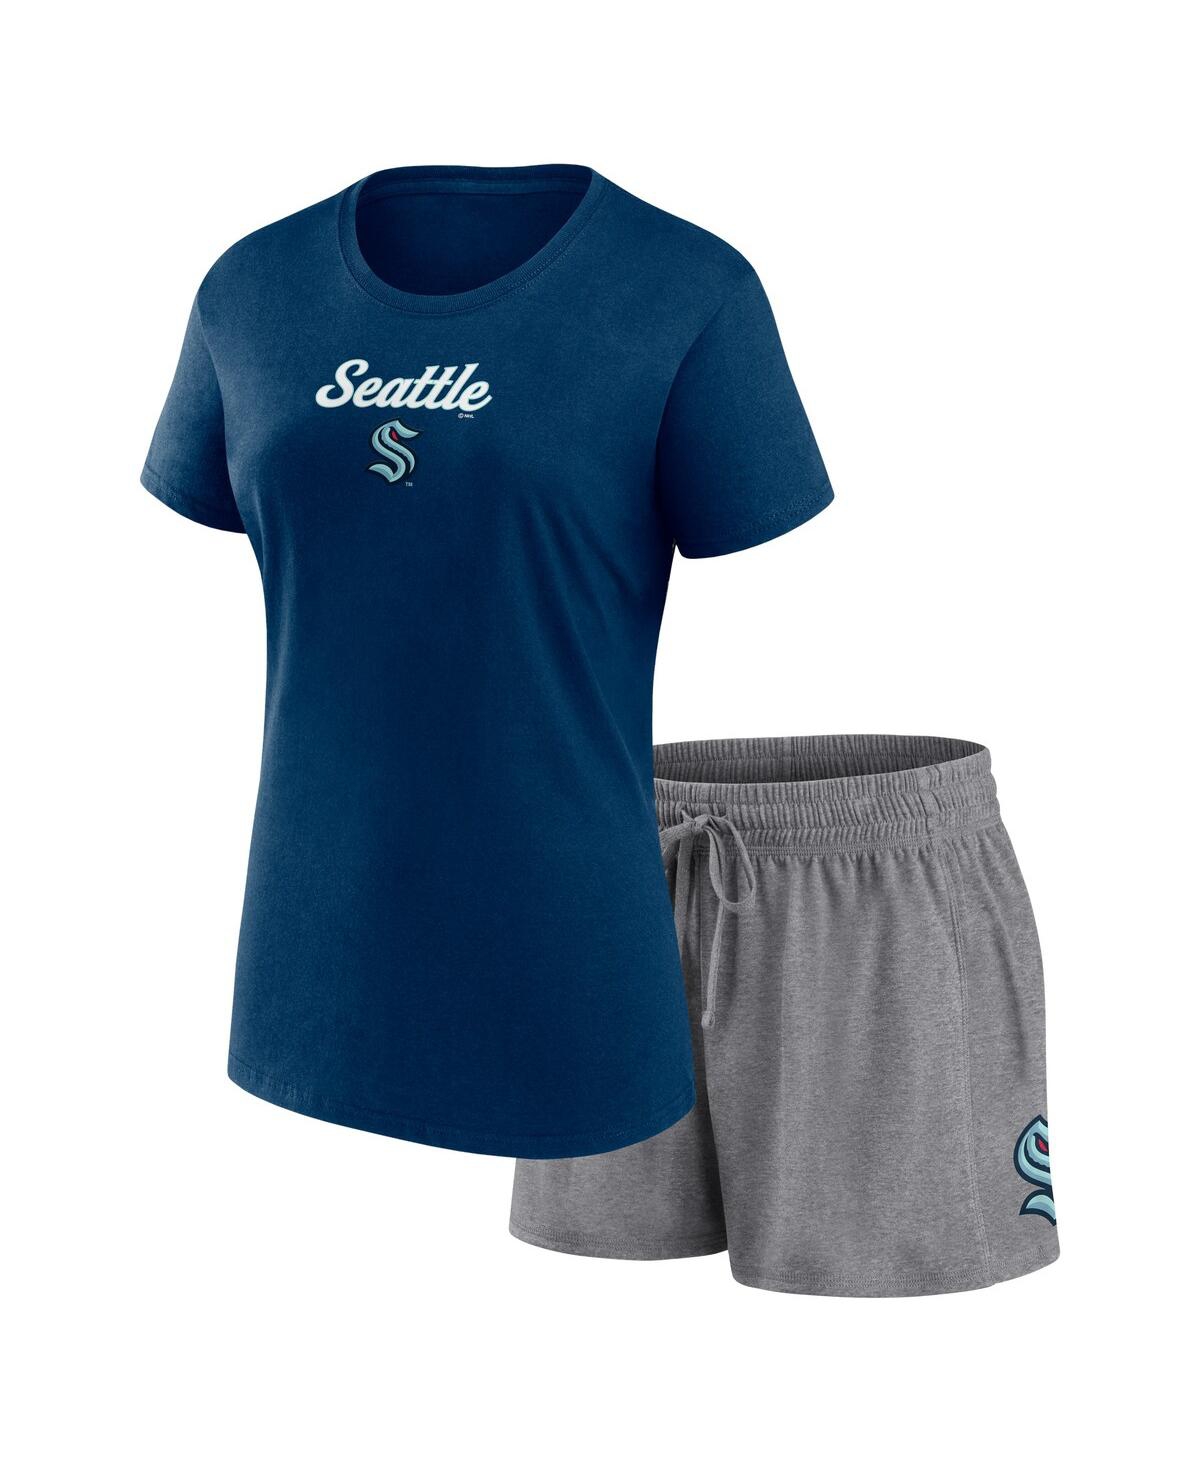 Women's Fanatics Navy, Gray Seattle Kraken Script T-shirt and Shorts Set - Navy, Gray